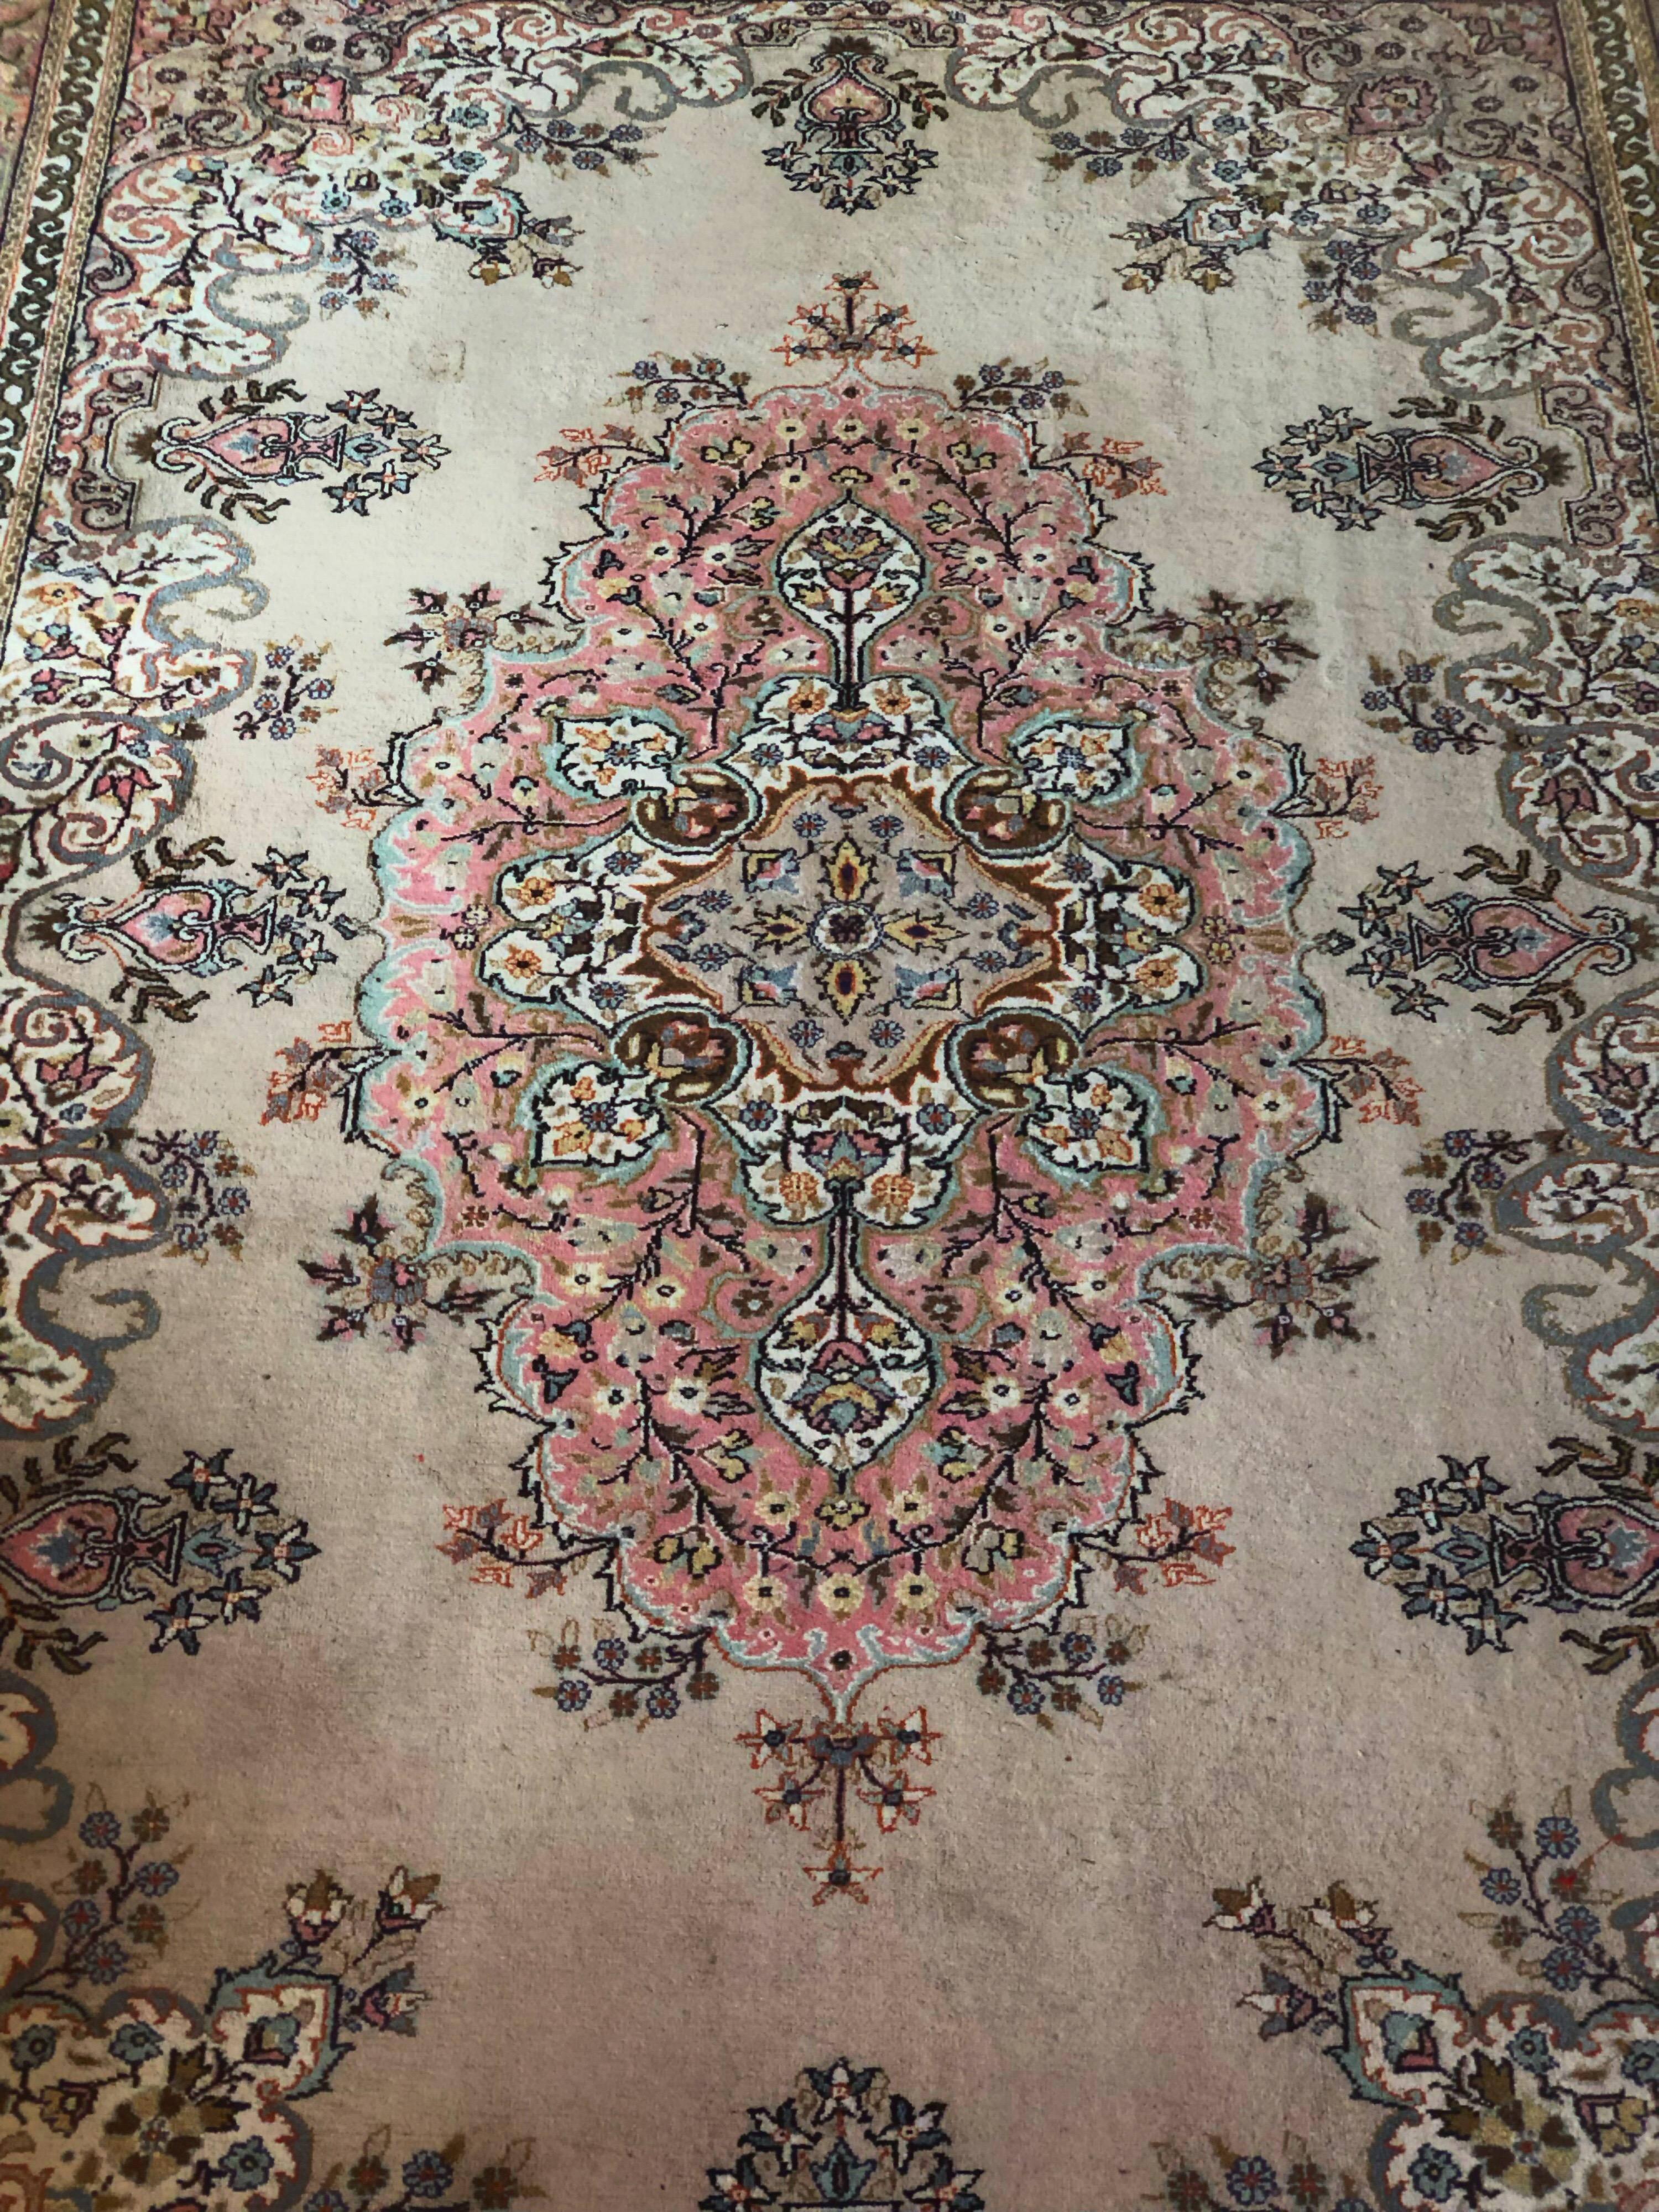 Amazing Turkish large carpet pink blue floral motives elegant oriental design.
Measures: 3m / 2m.